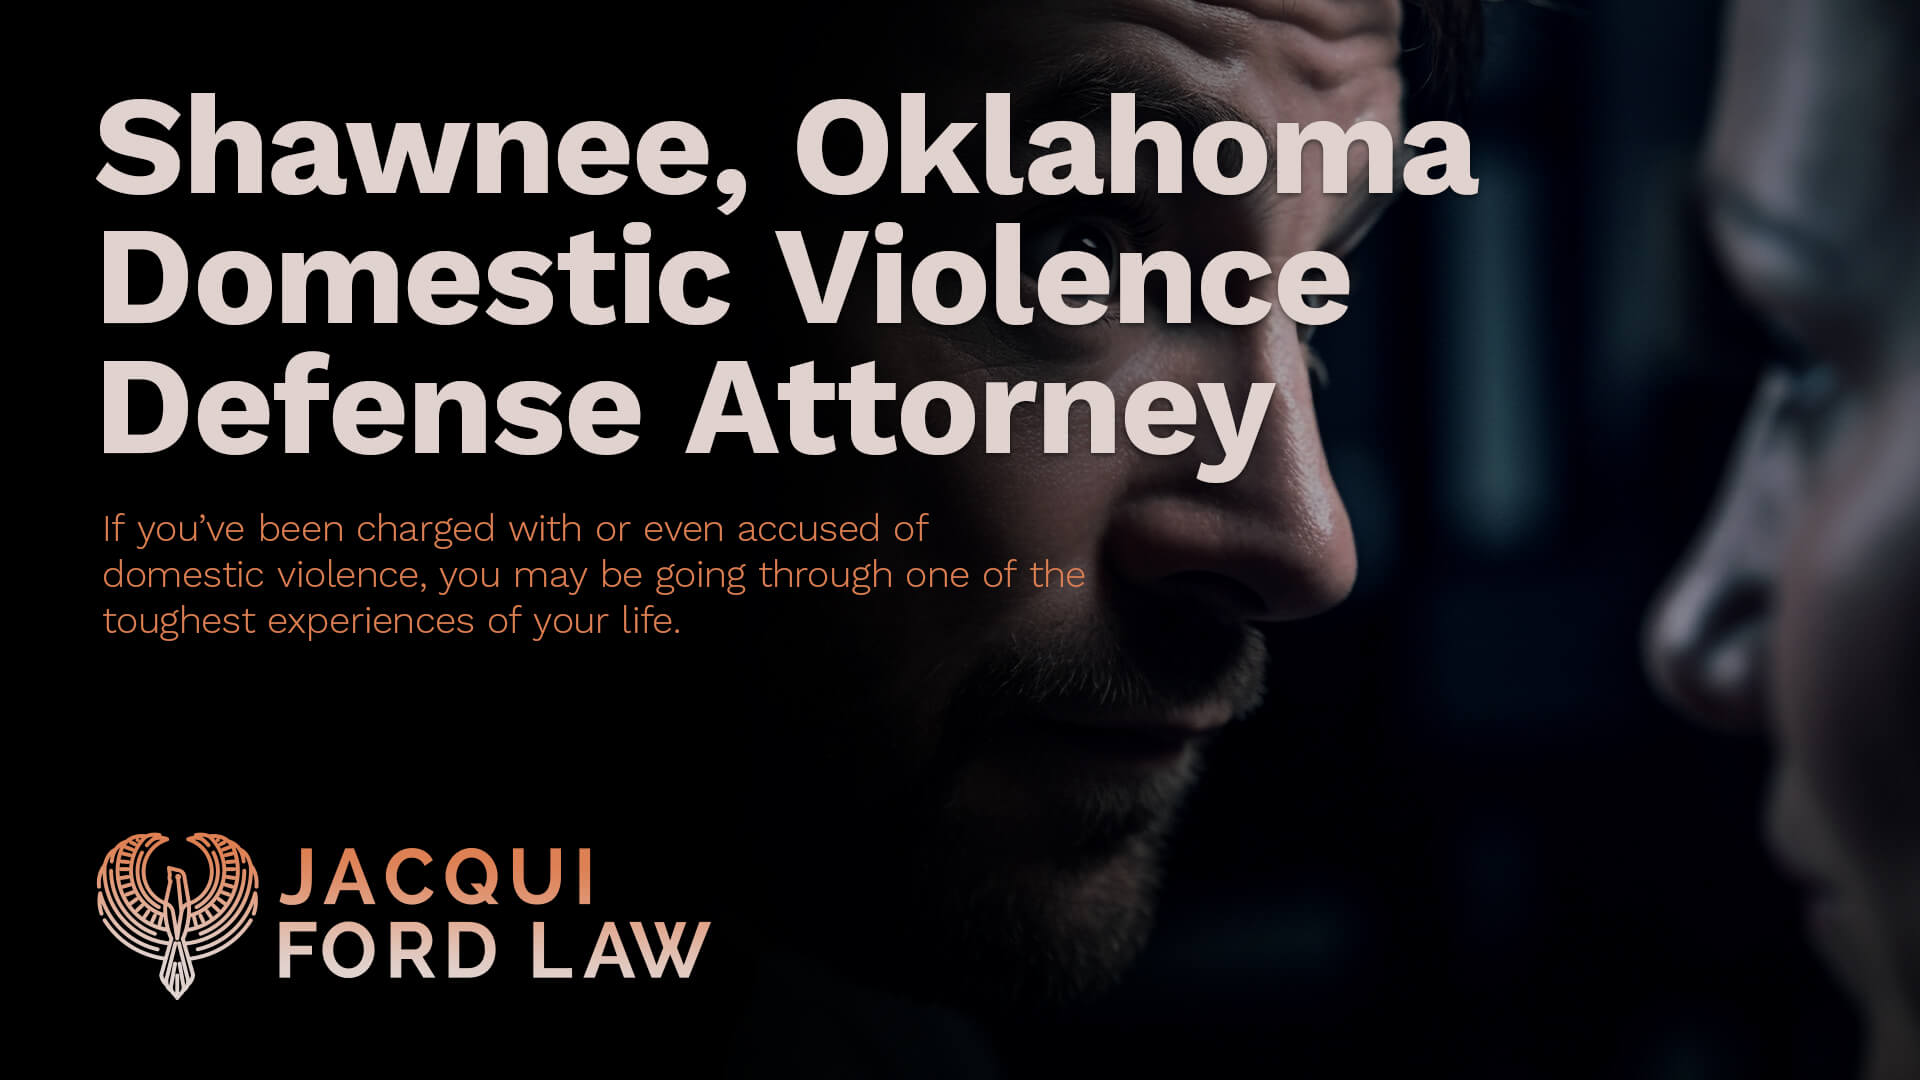 Shawnee Oklahoma Domestic Violence Defense Attorney - jacqui ford law